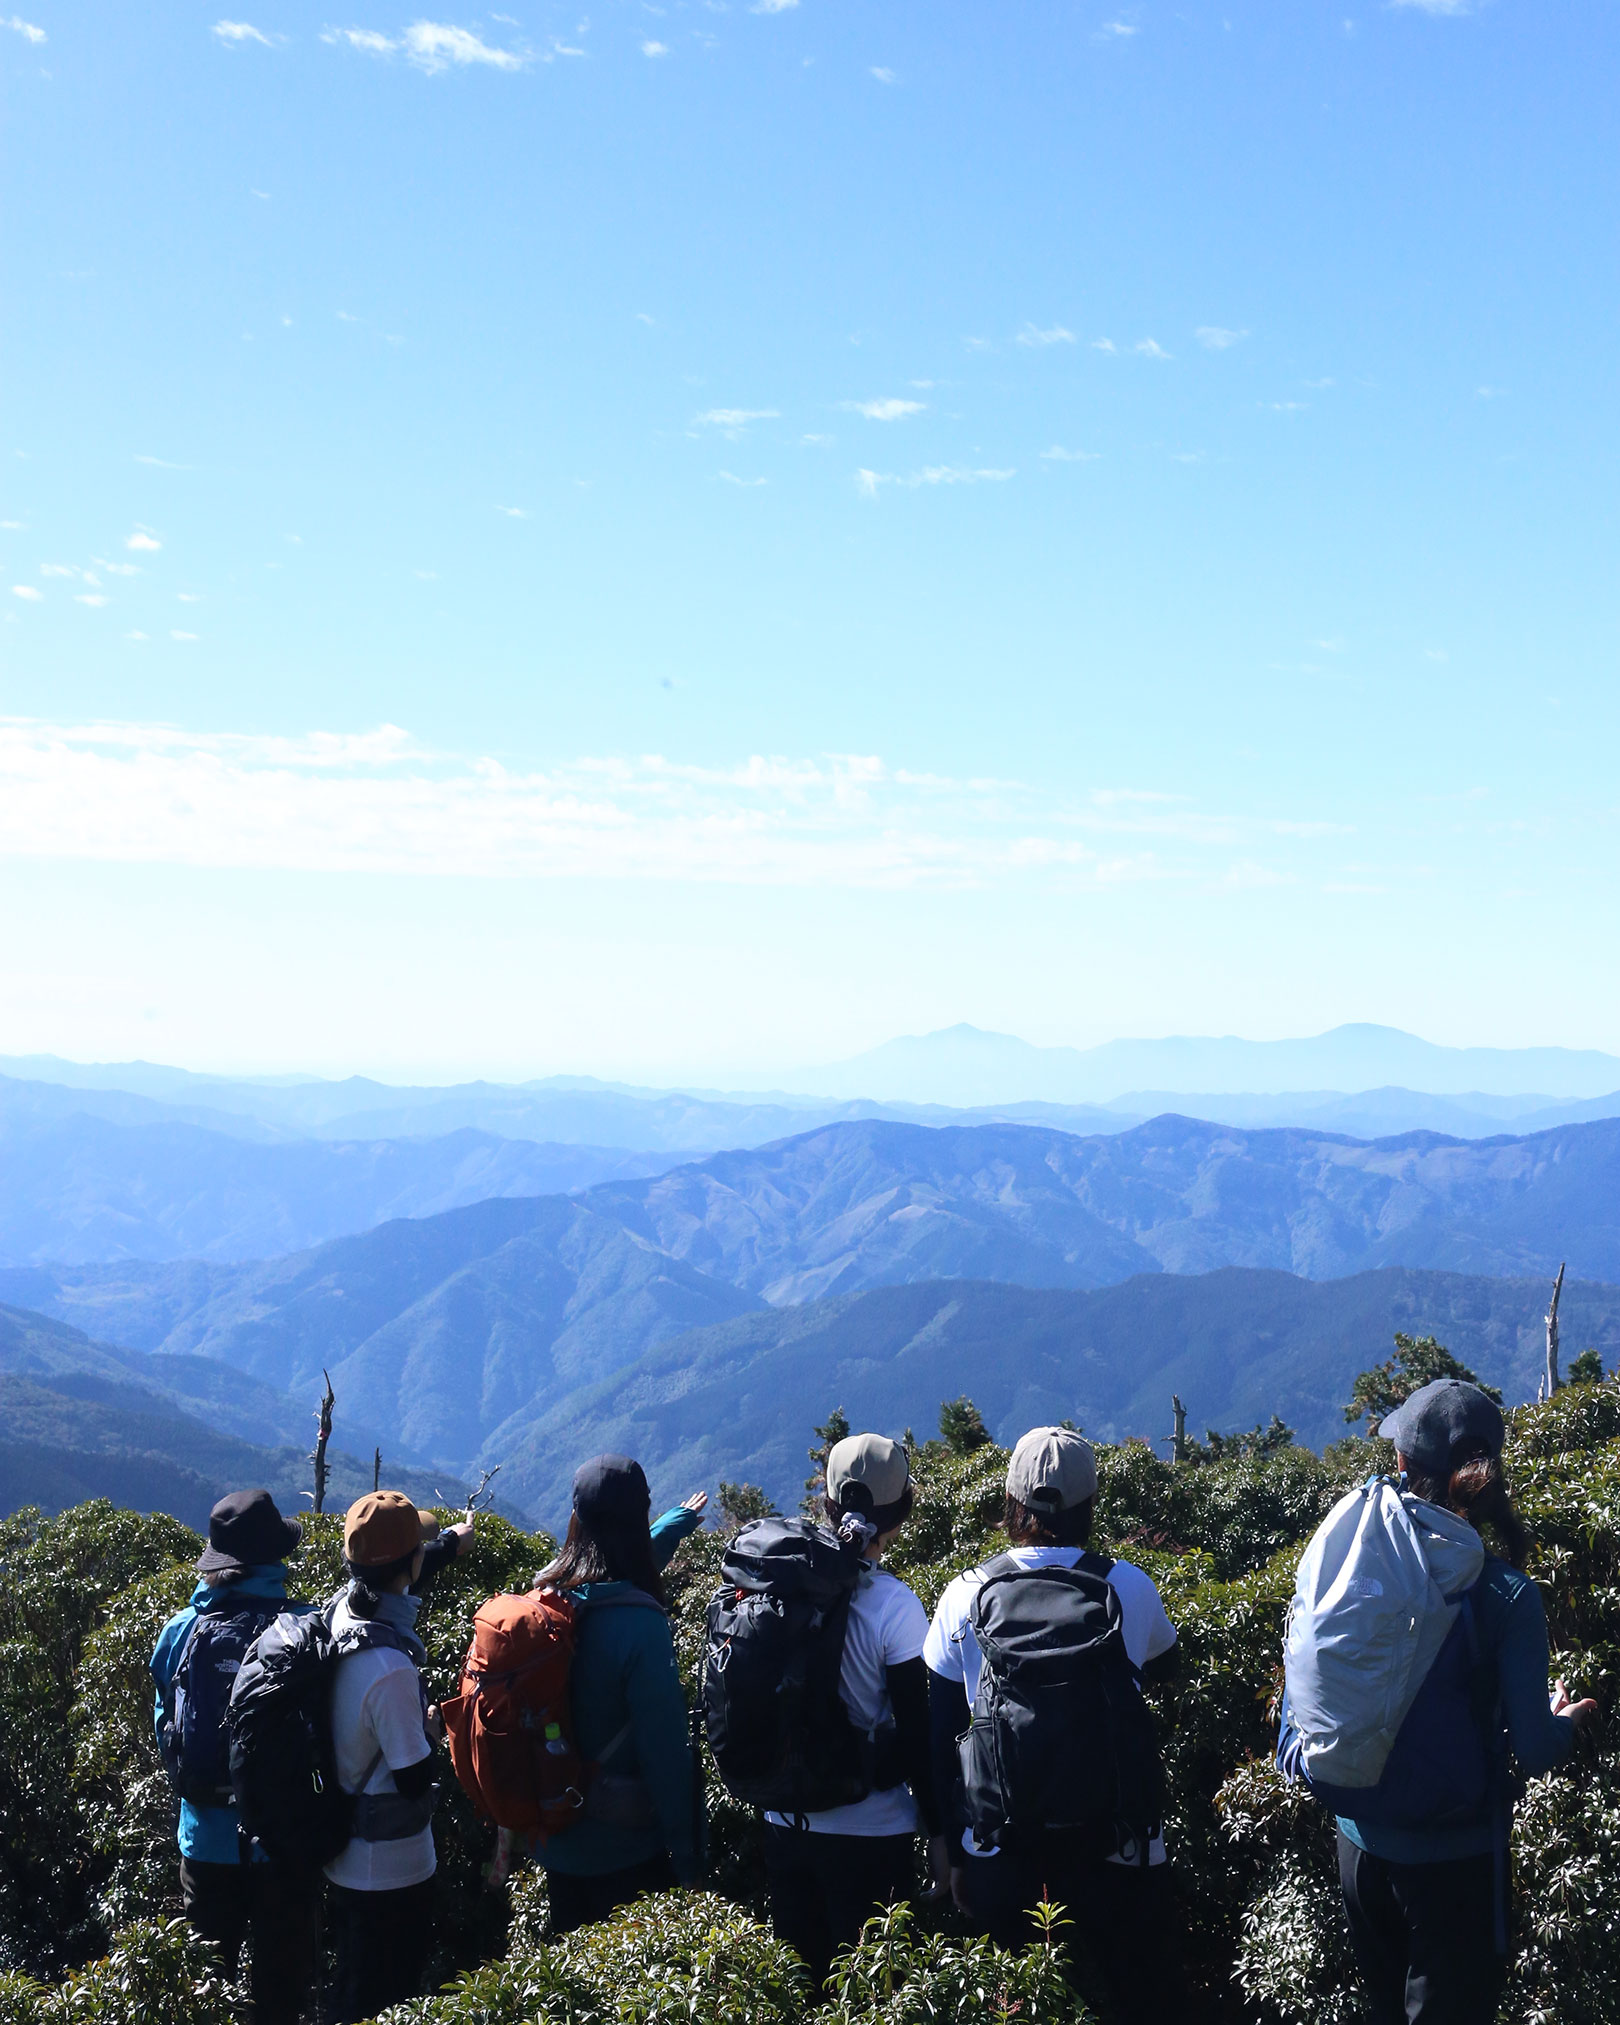 Kirishima mountains viewed from the trail